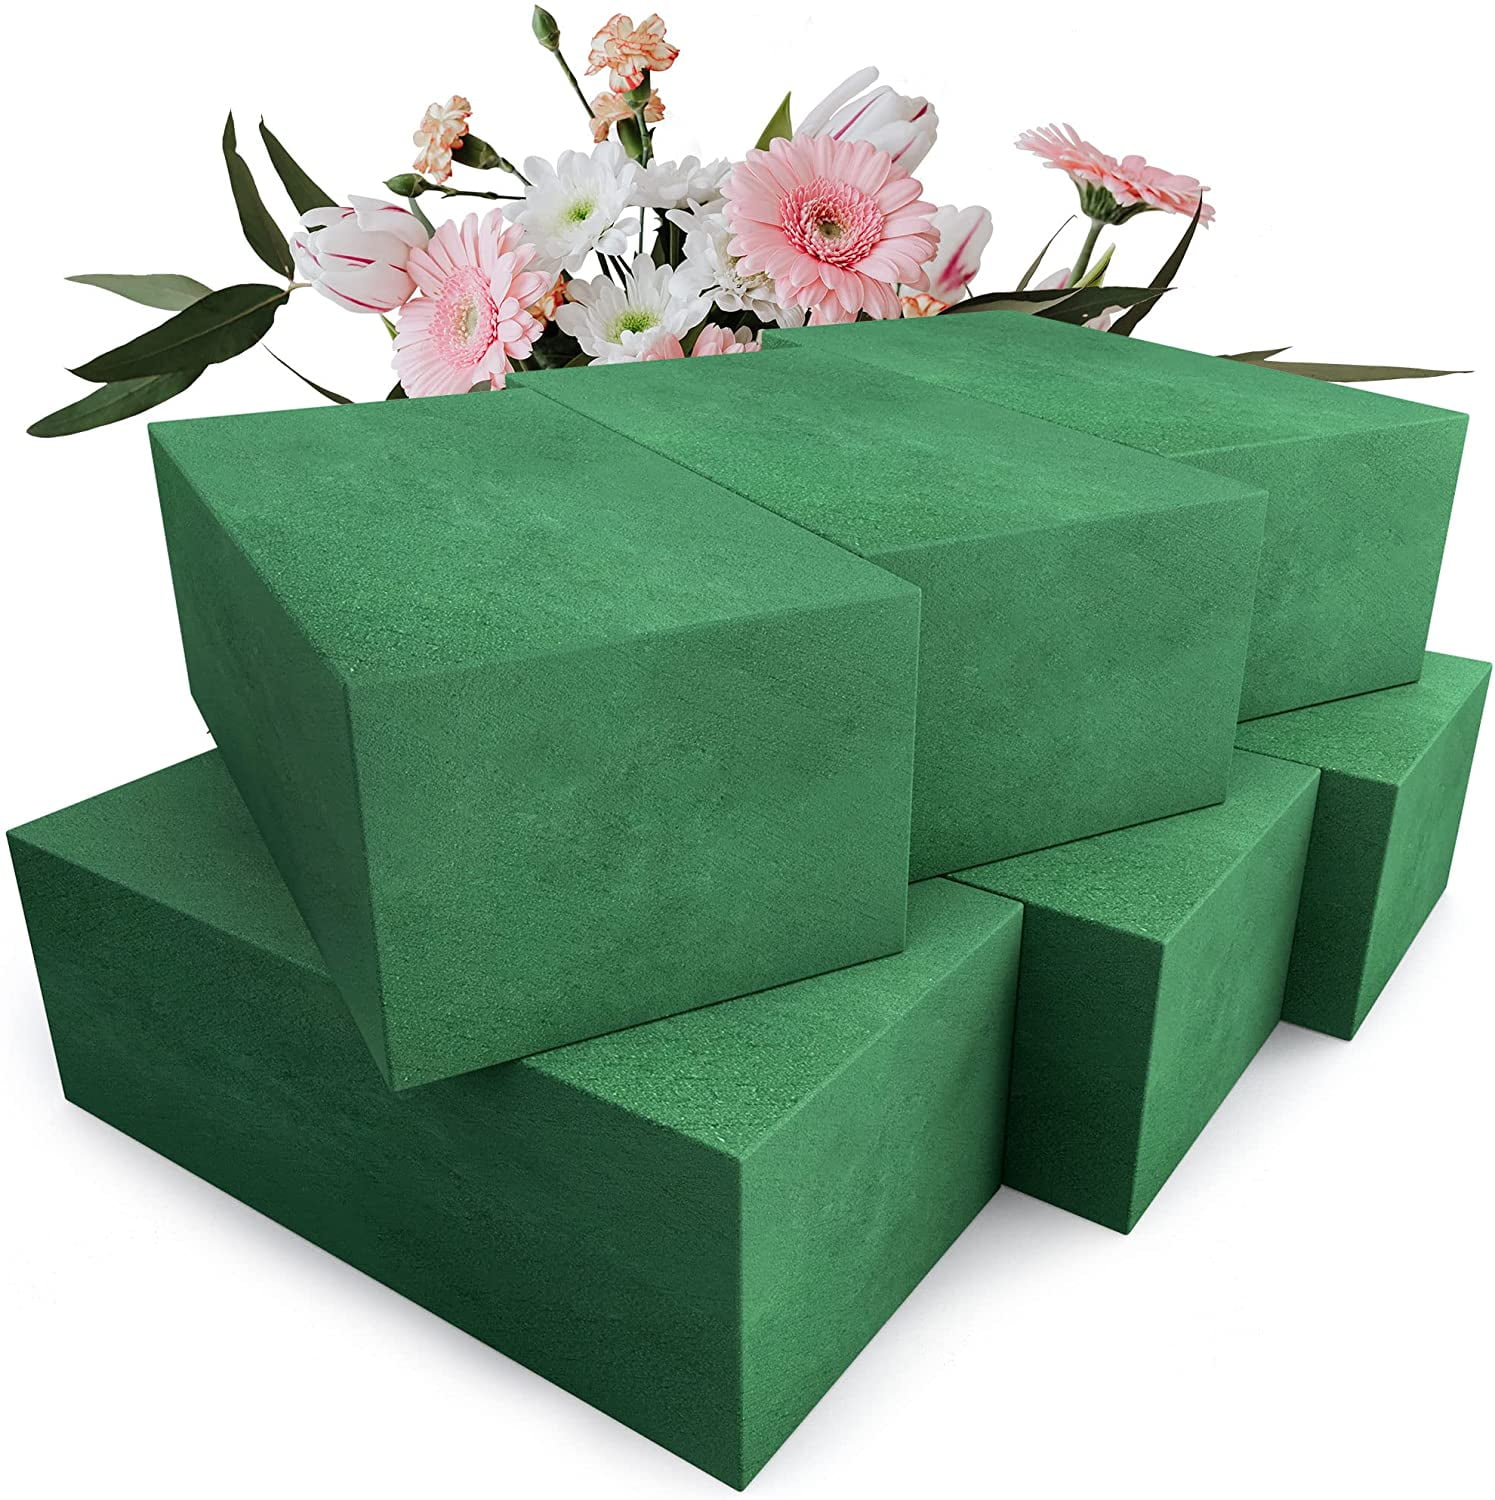 Floral Foam Blocks (4 Bricks) - Wet Florist Foam - Green Foam Block for  Artificial and Fresh Flowers Arrangement - Floral Foam Size 8.8x4.1x2.7 for  Arts and Crafts